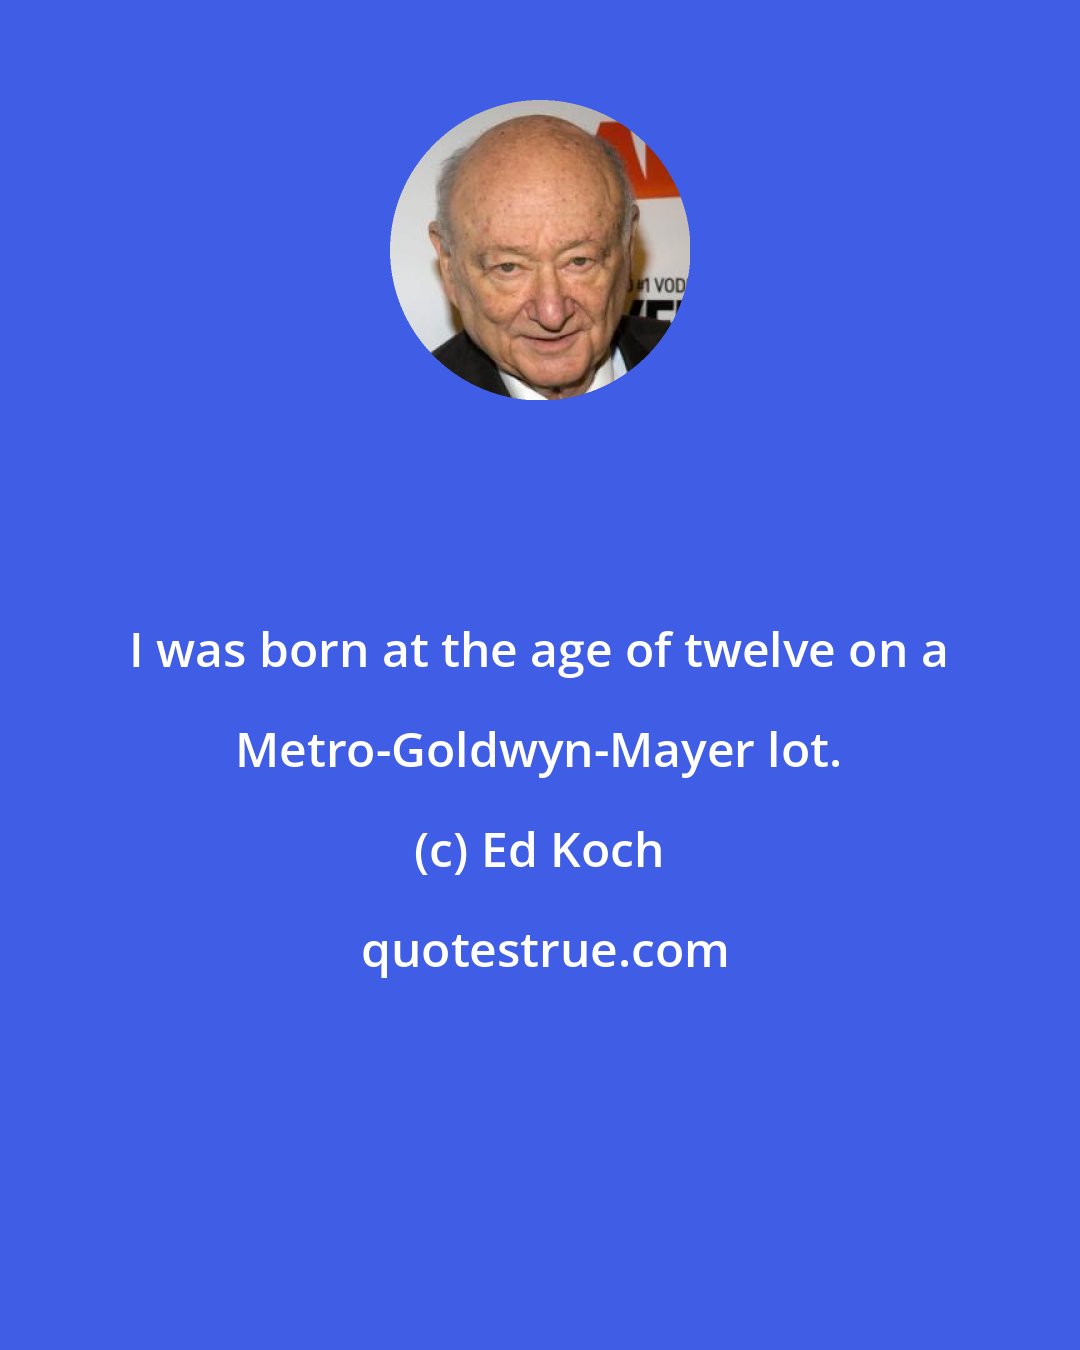 Ed Koch: I was born at the age of twelve on a Metro-Goldwyn-Mayer lot.